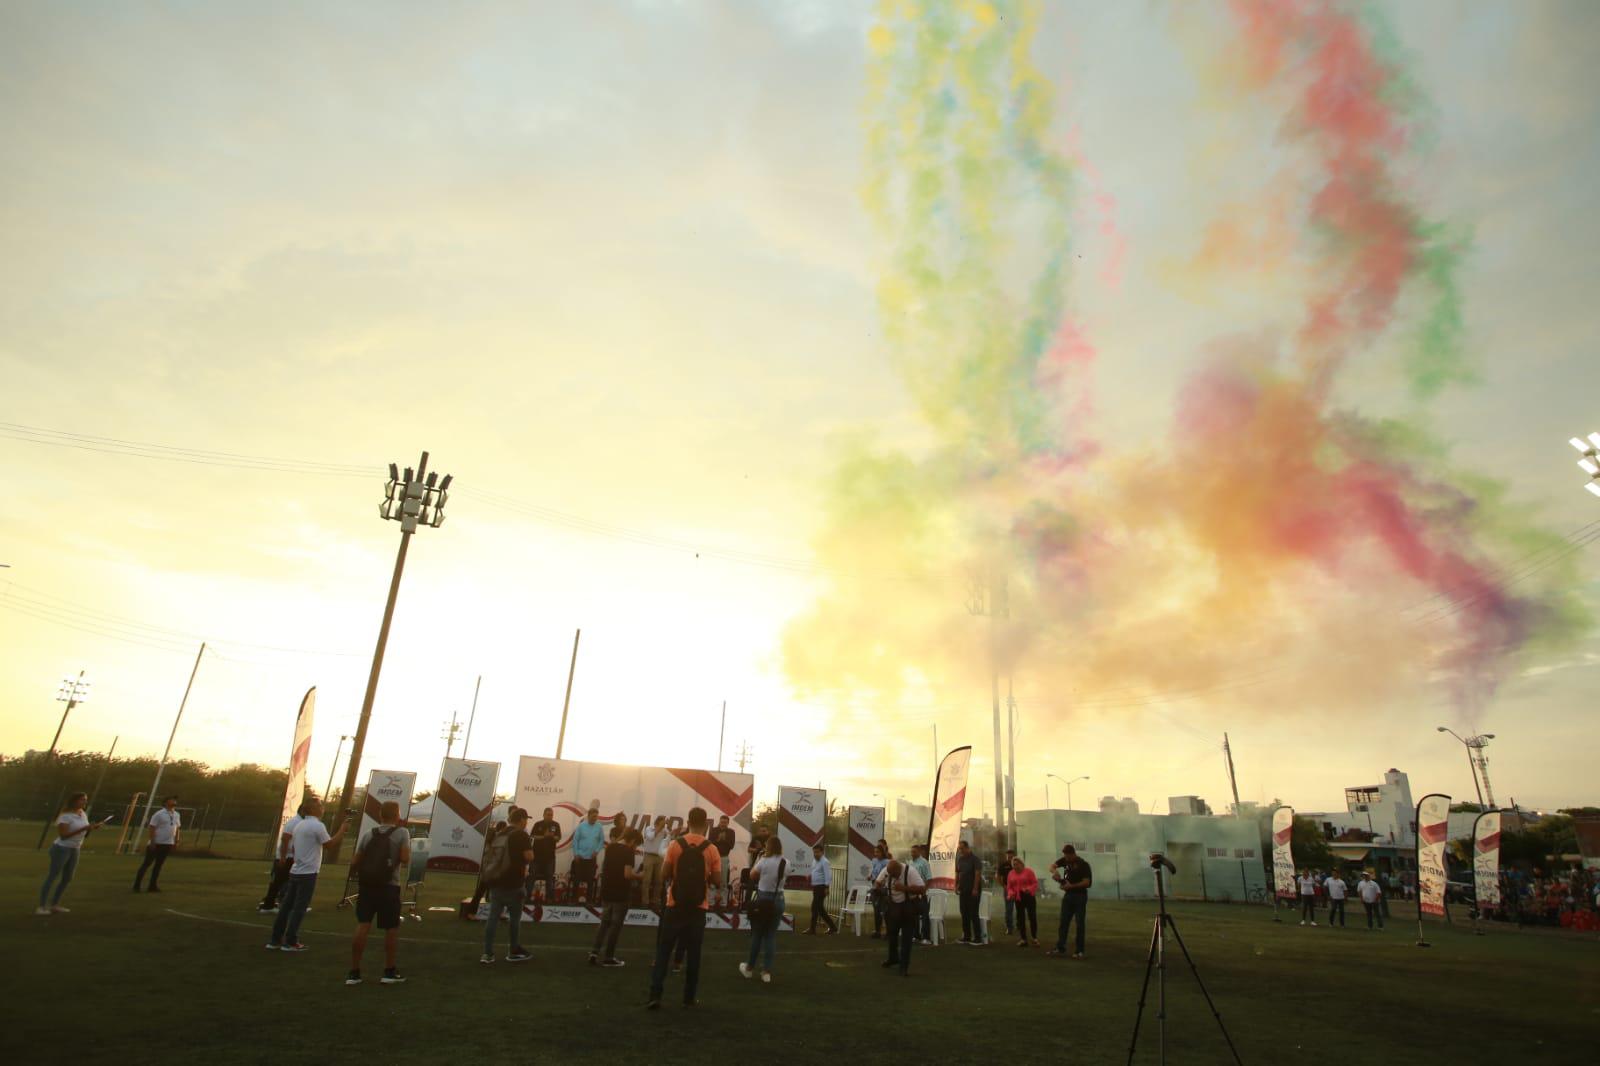 $!Oficializan apertura de Estatal de futbol, en Mazatlán